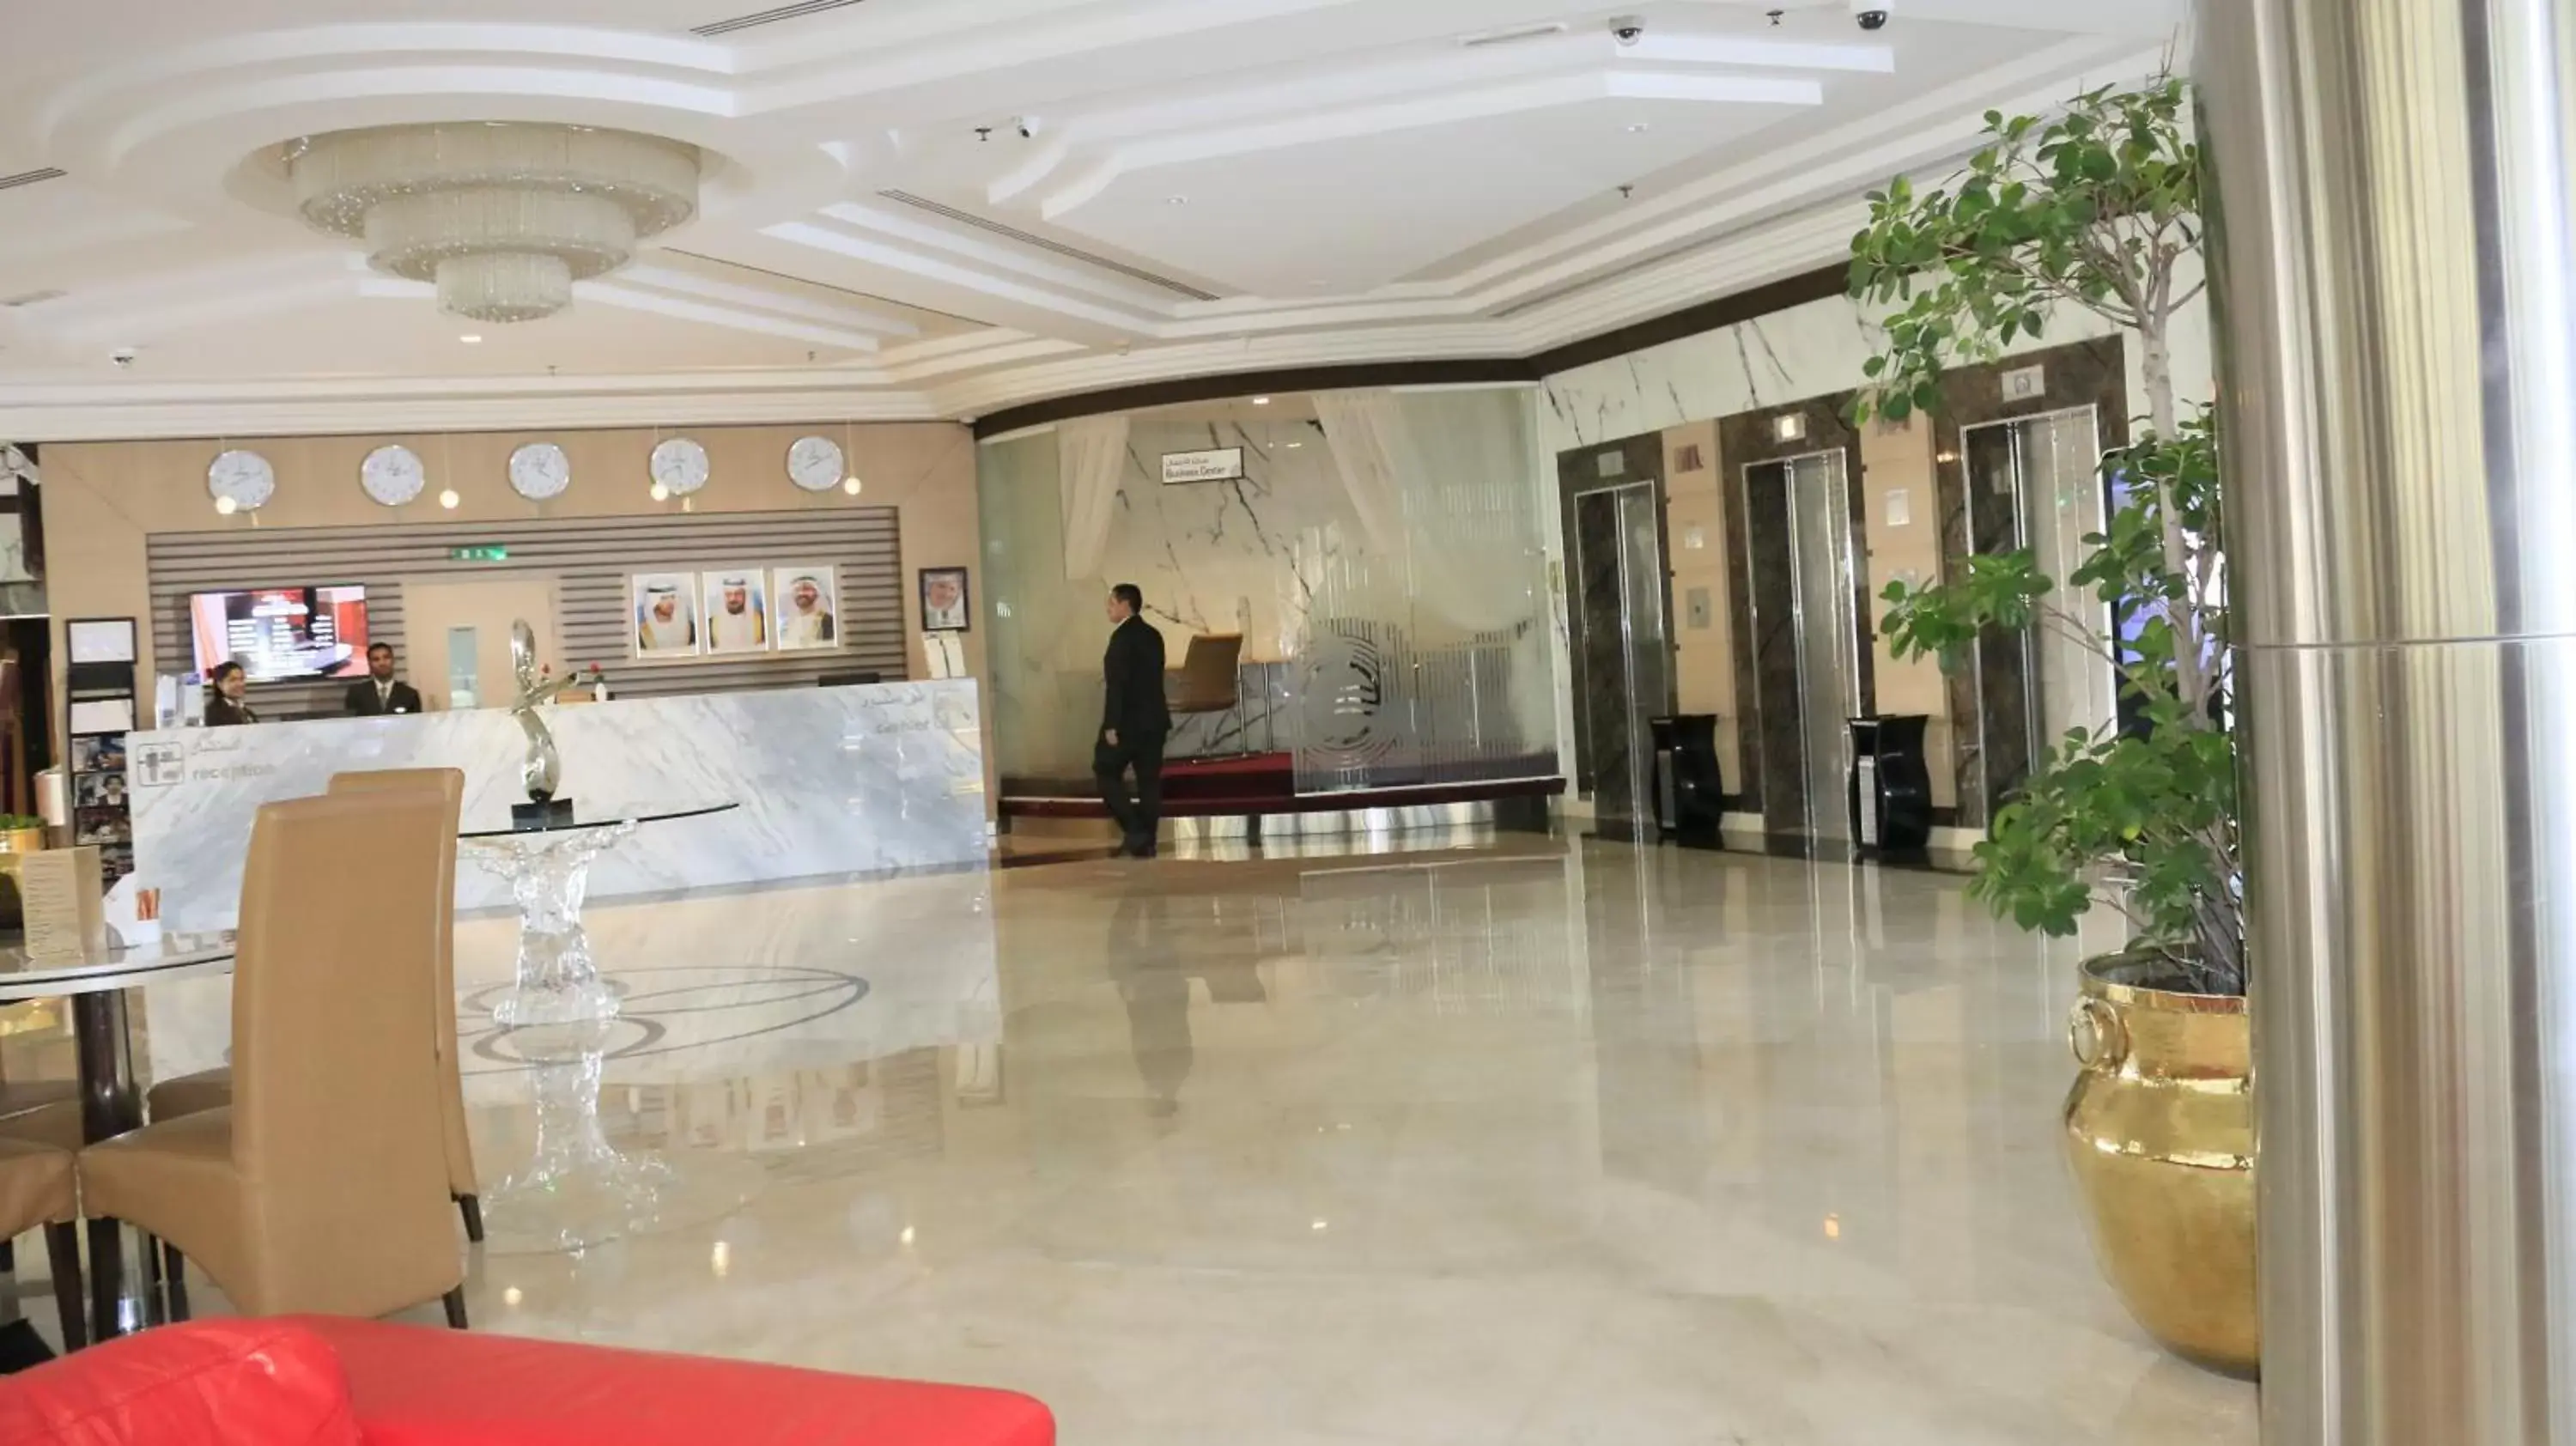 Lobby or reception in Dubai Grand Hotel by Fortune, Dubai Airport